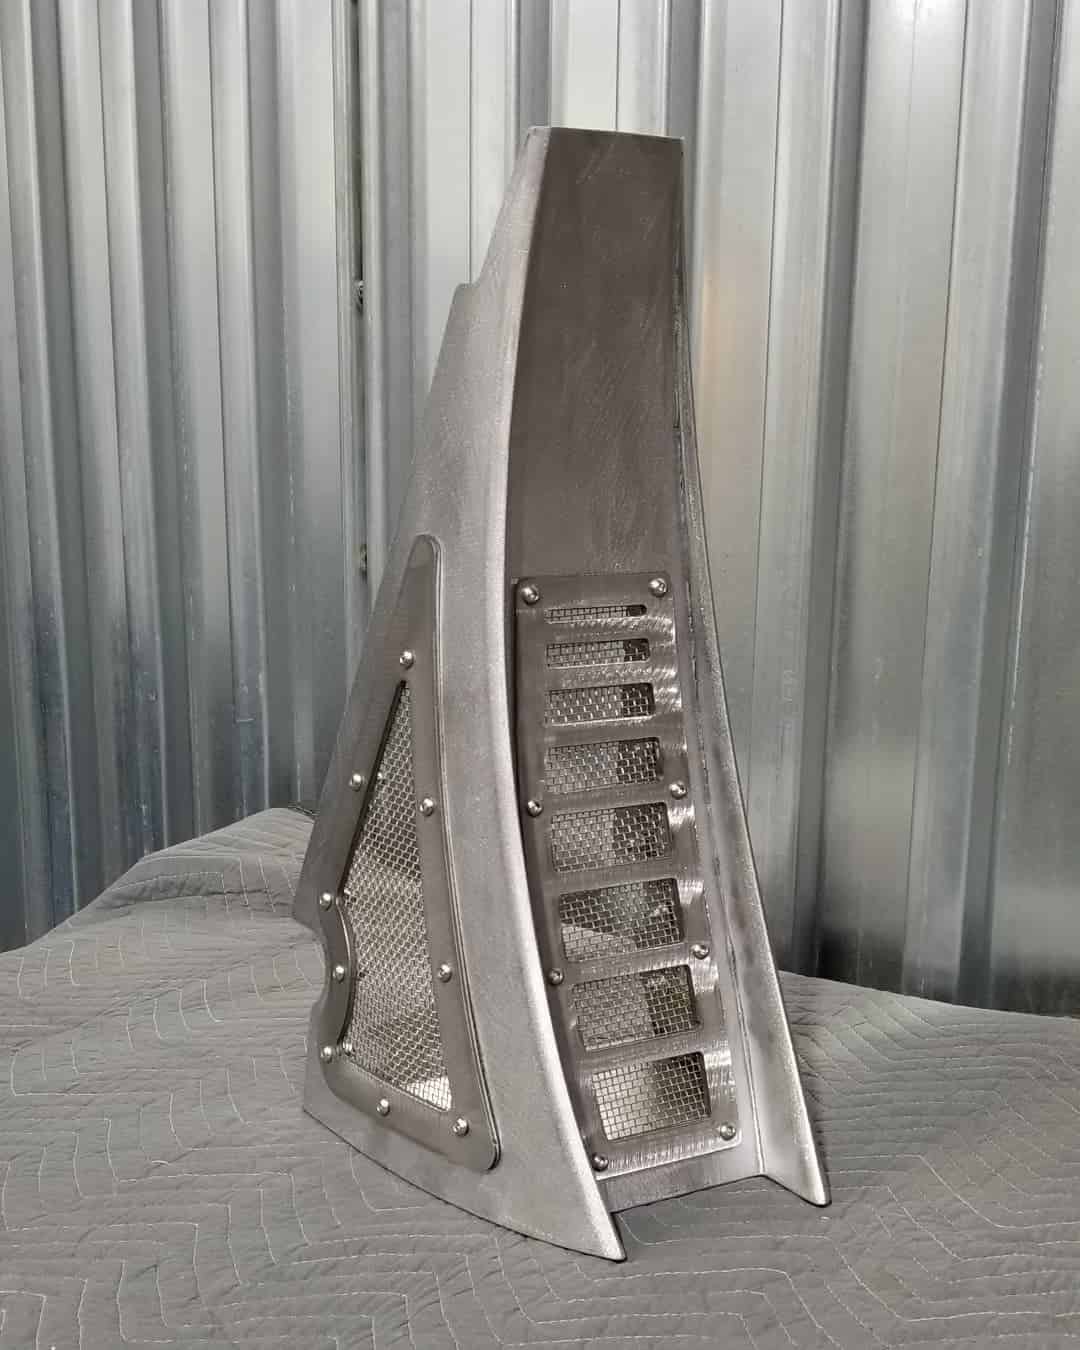 MRI center stand skid plate